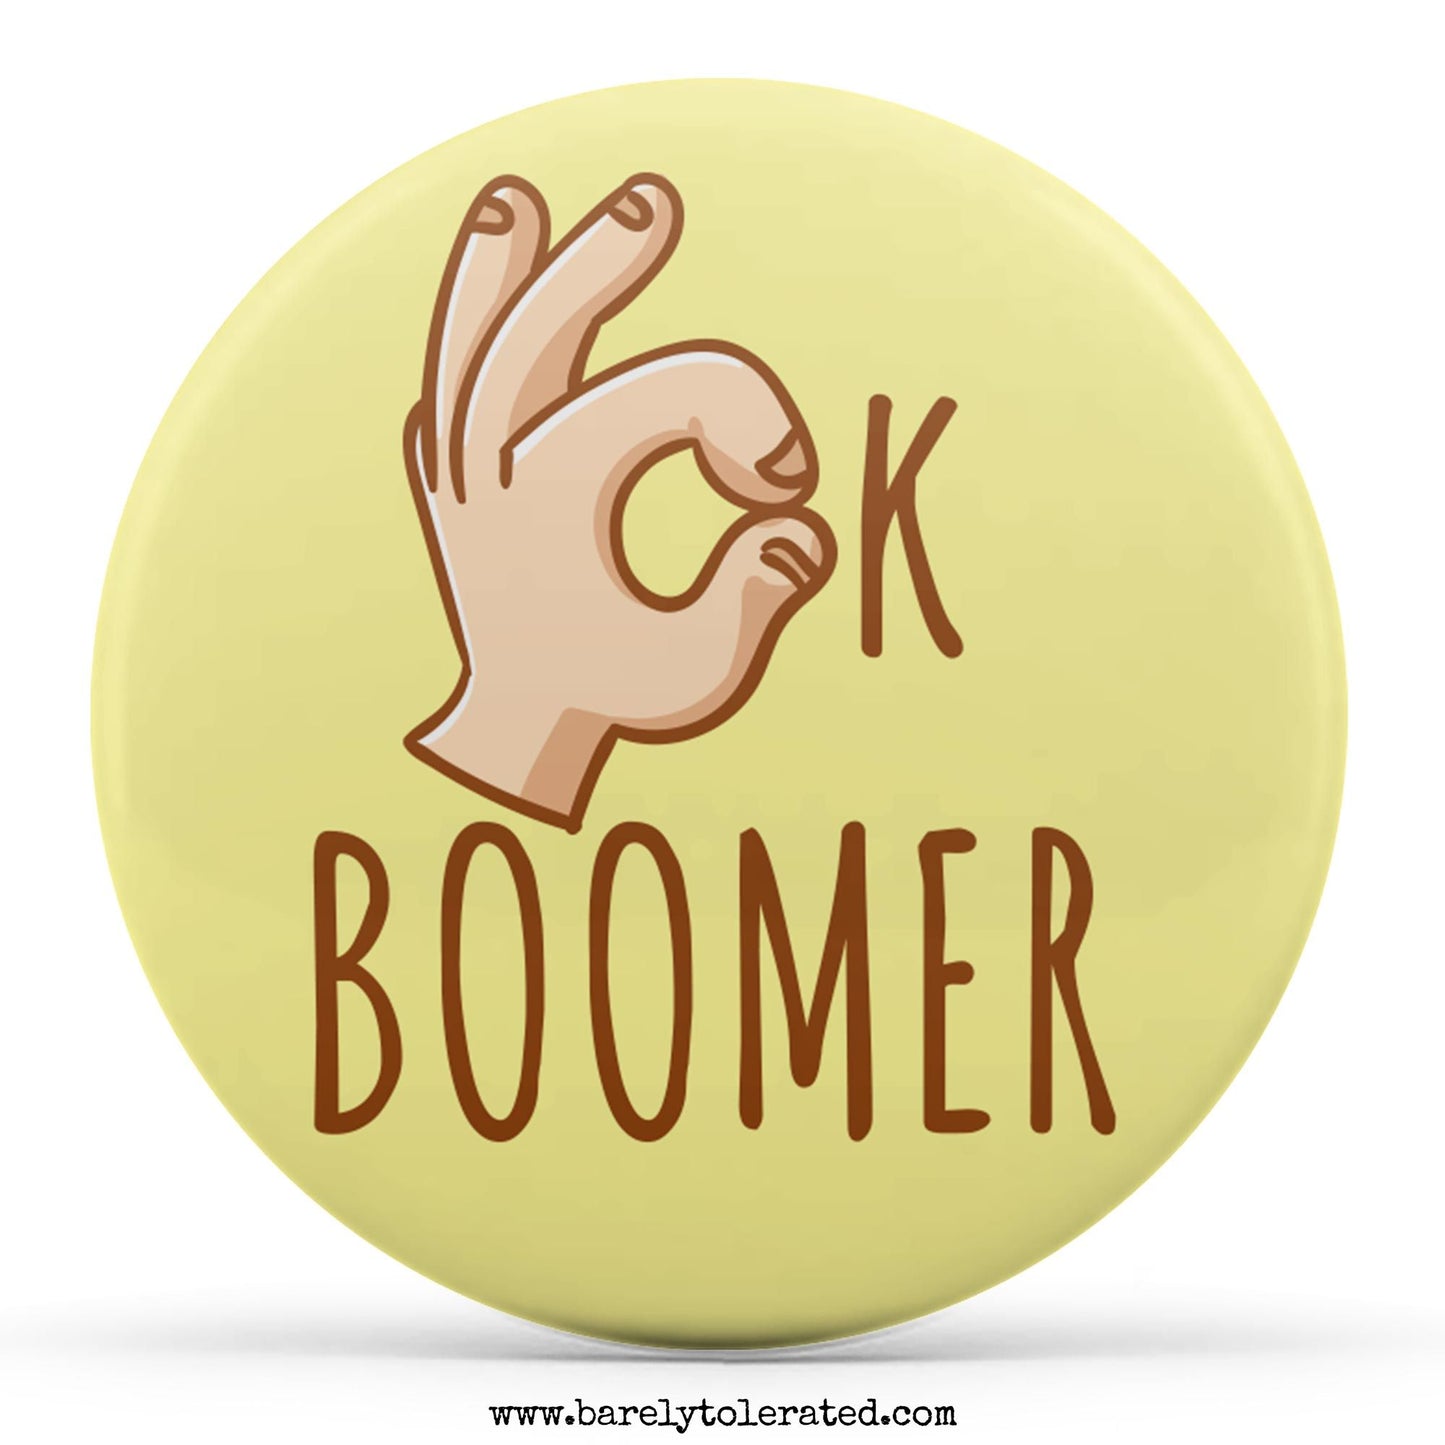 OK Boomer Image